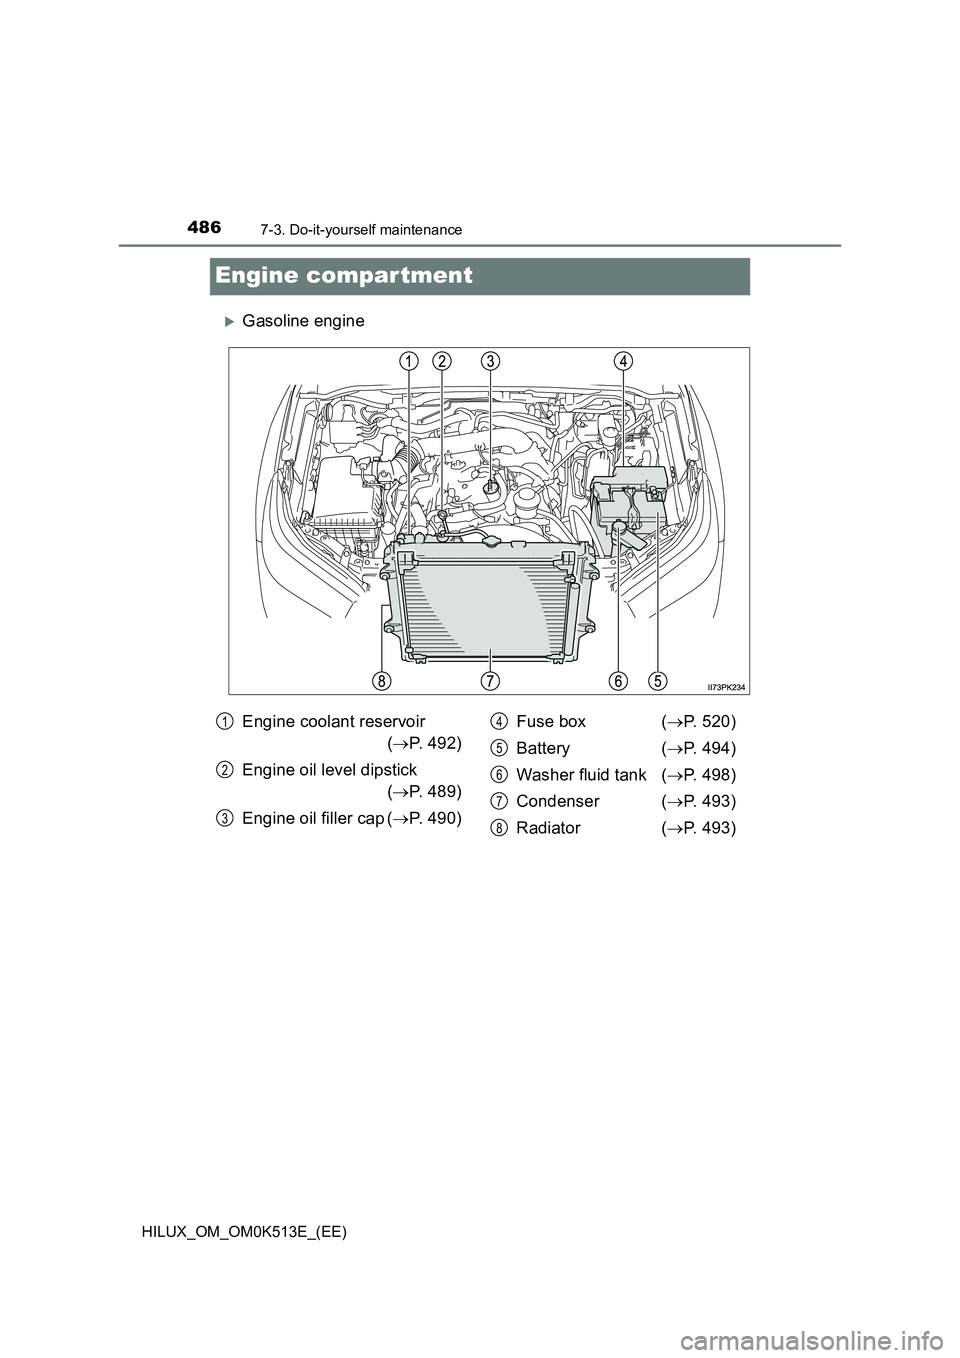 TOYOTA HILUX 2021  Owners Manual (in English) 4867-3. Do-it-yourself maintenance
HILUX_OM_OM0K513E_(EE)
Engine compar tment
Gasoline engine
Engine coolant reservoir  
( P. 492) 
Engine oil level dipstick  
 ( P. 489) 
Engine oil filler c